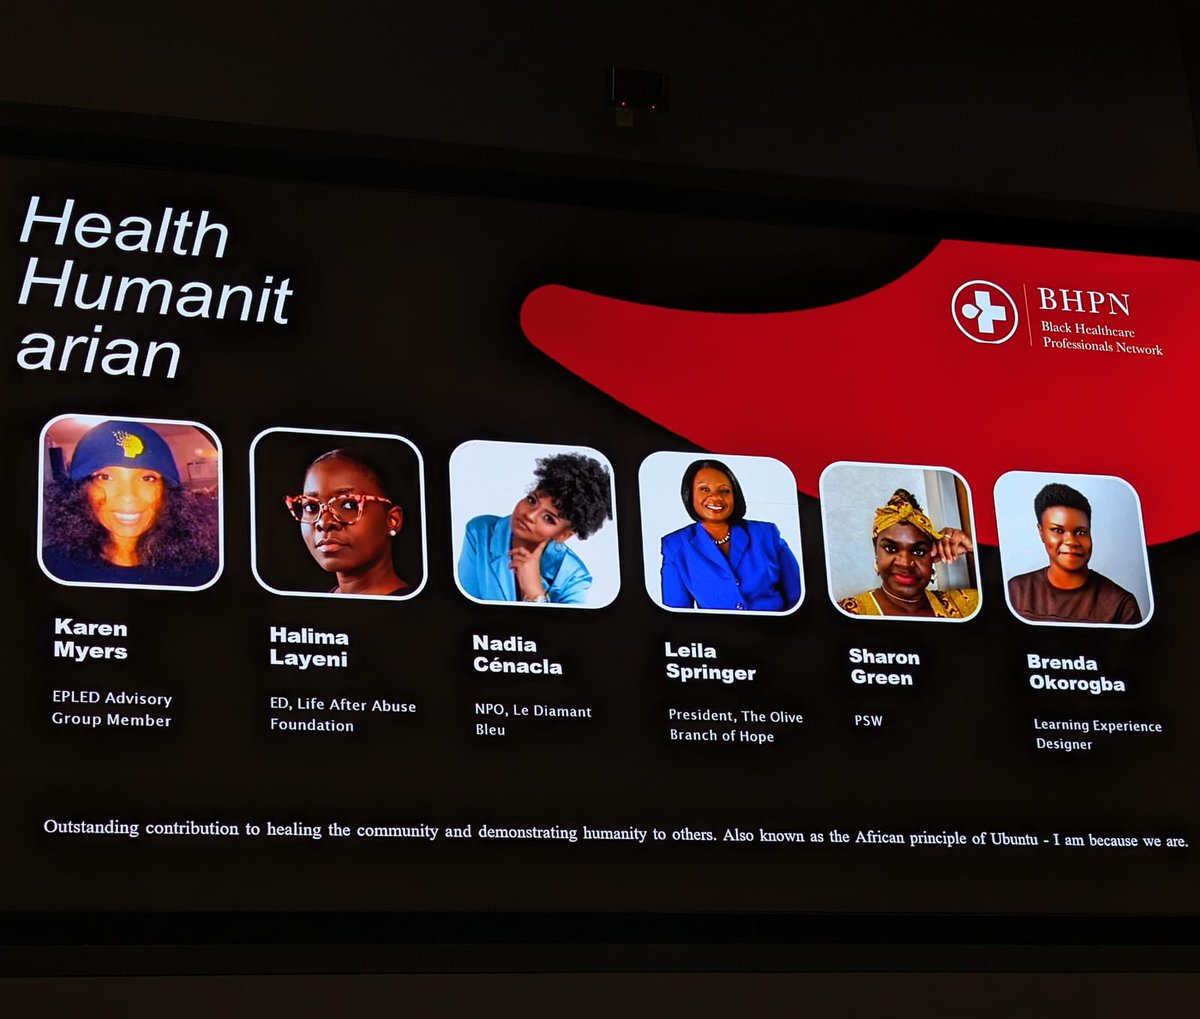 Karen was recently nominated for @bhpncanada - Health Humanitarian award at the Black Health Heroes Gala. Go Karen!